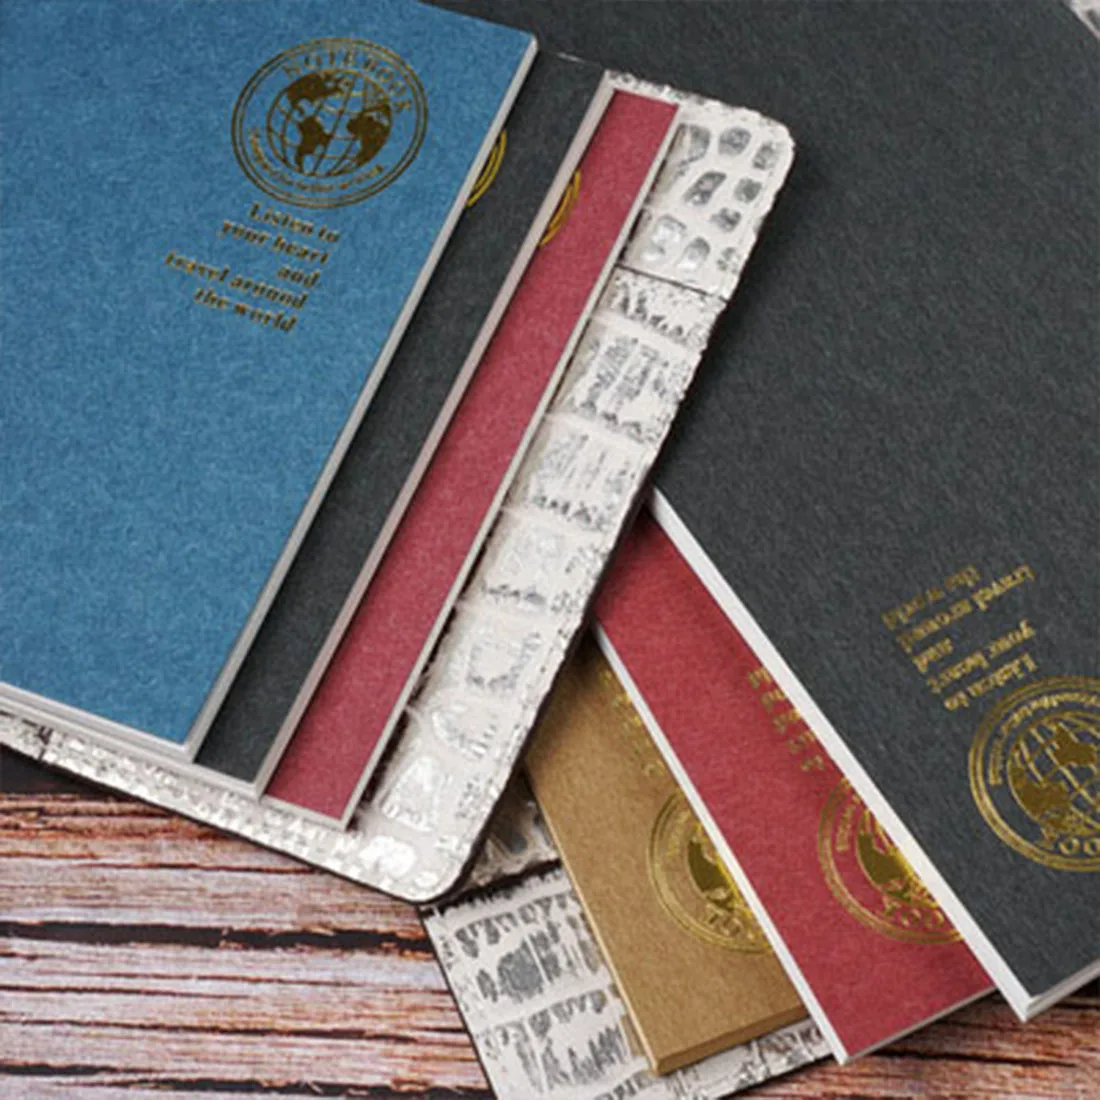 Retro Foil Gold Cover Travelers Notebook Refill Filler Paper for Midori Notebook and Journal Insert Refill Standard Passport 2